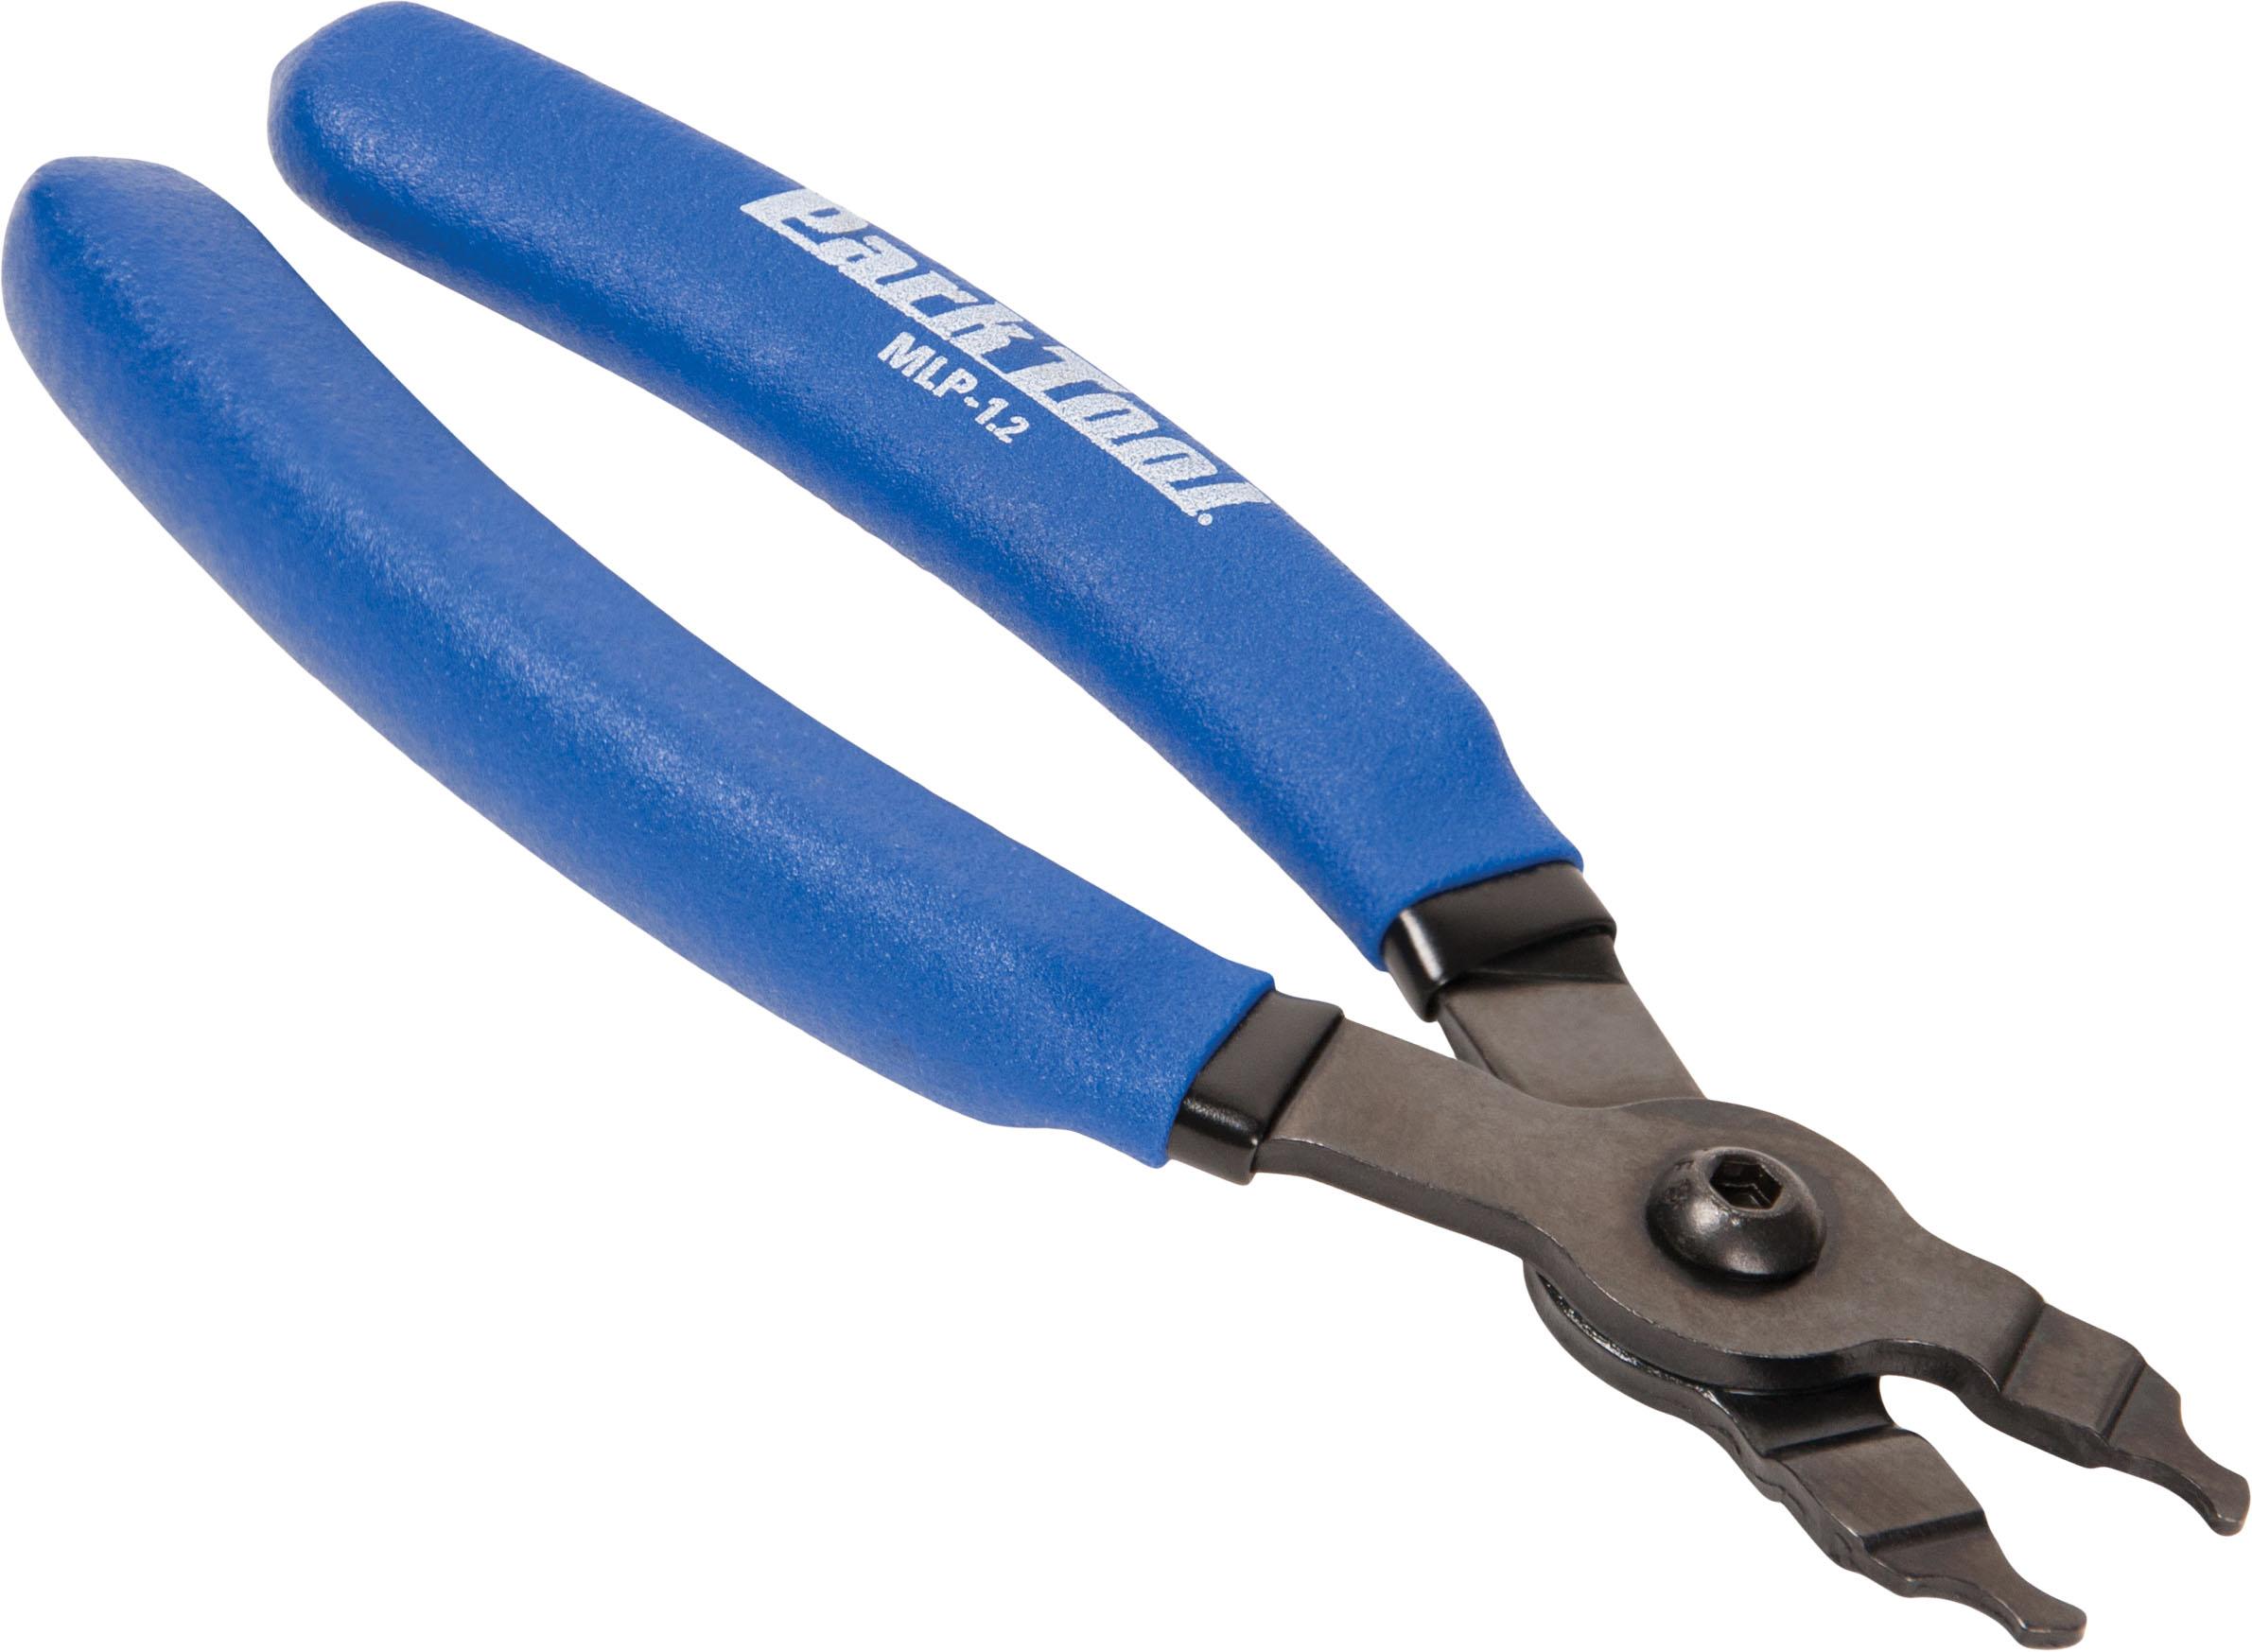 Park Tool Master Link Pliers Mlp-1.2 - Blue/black